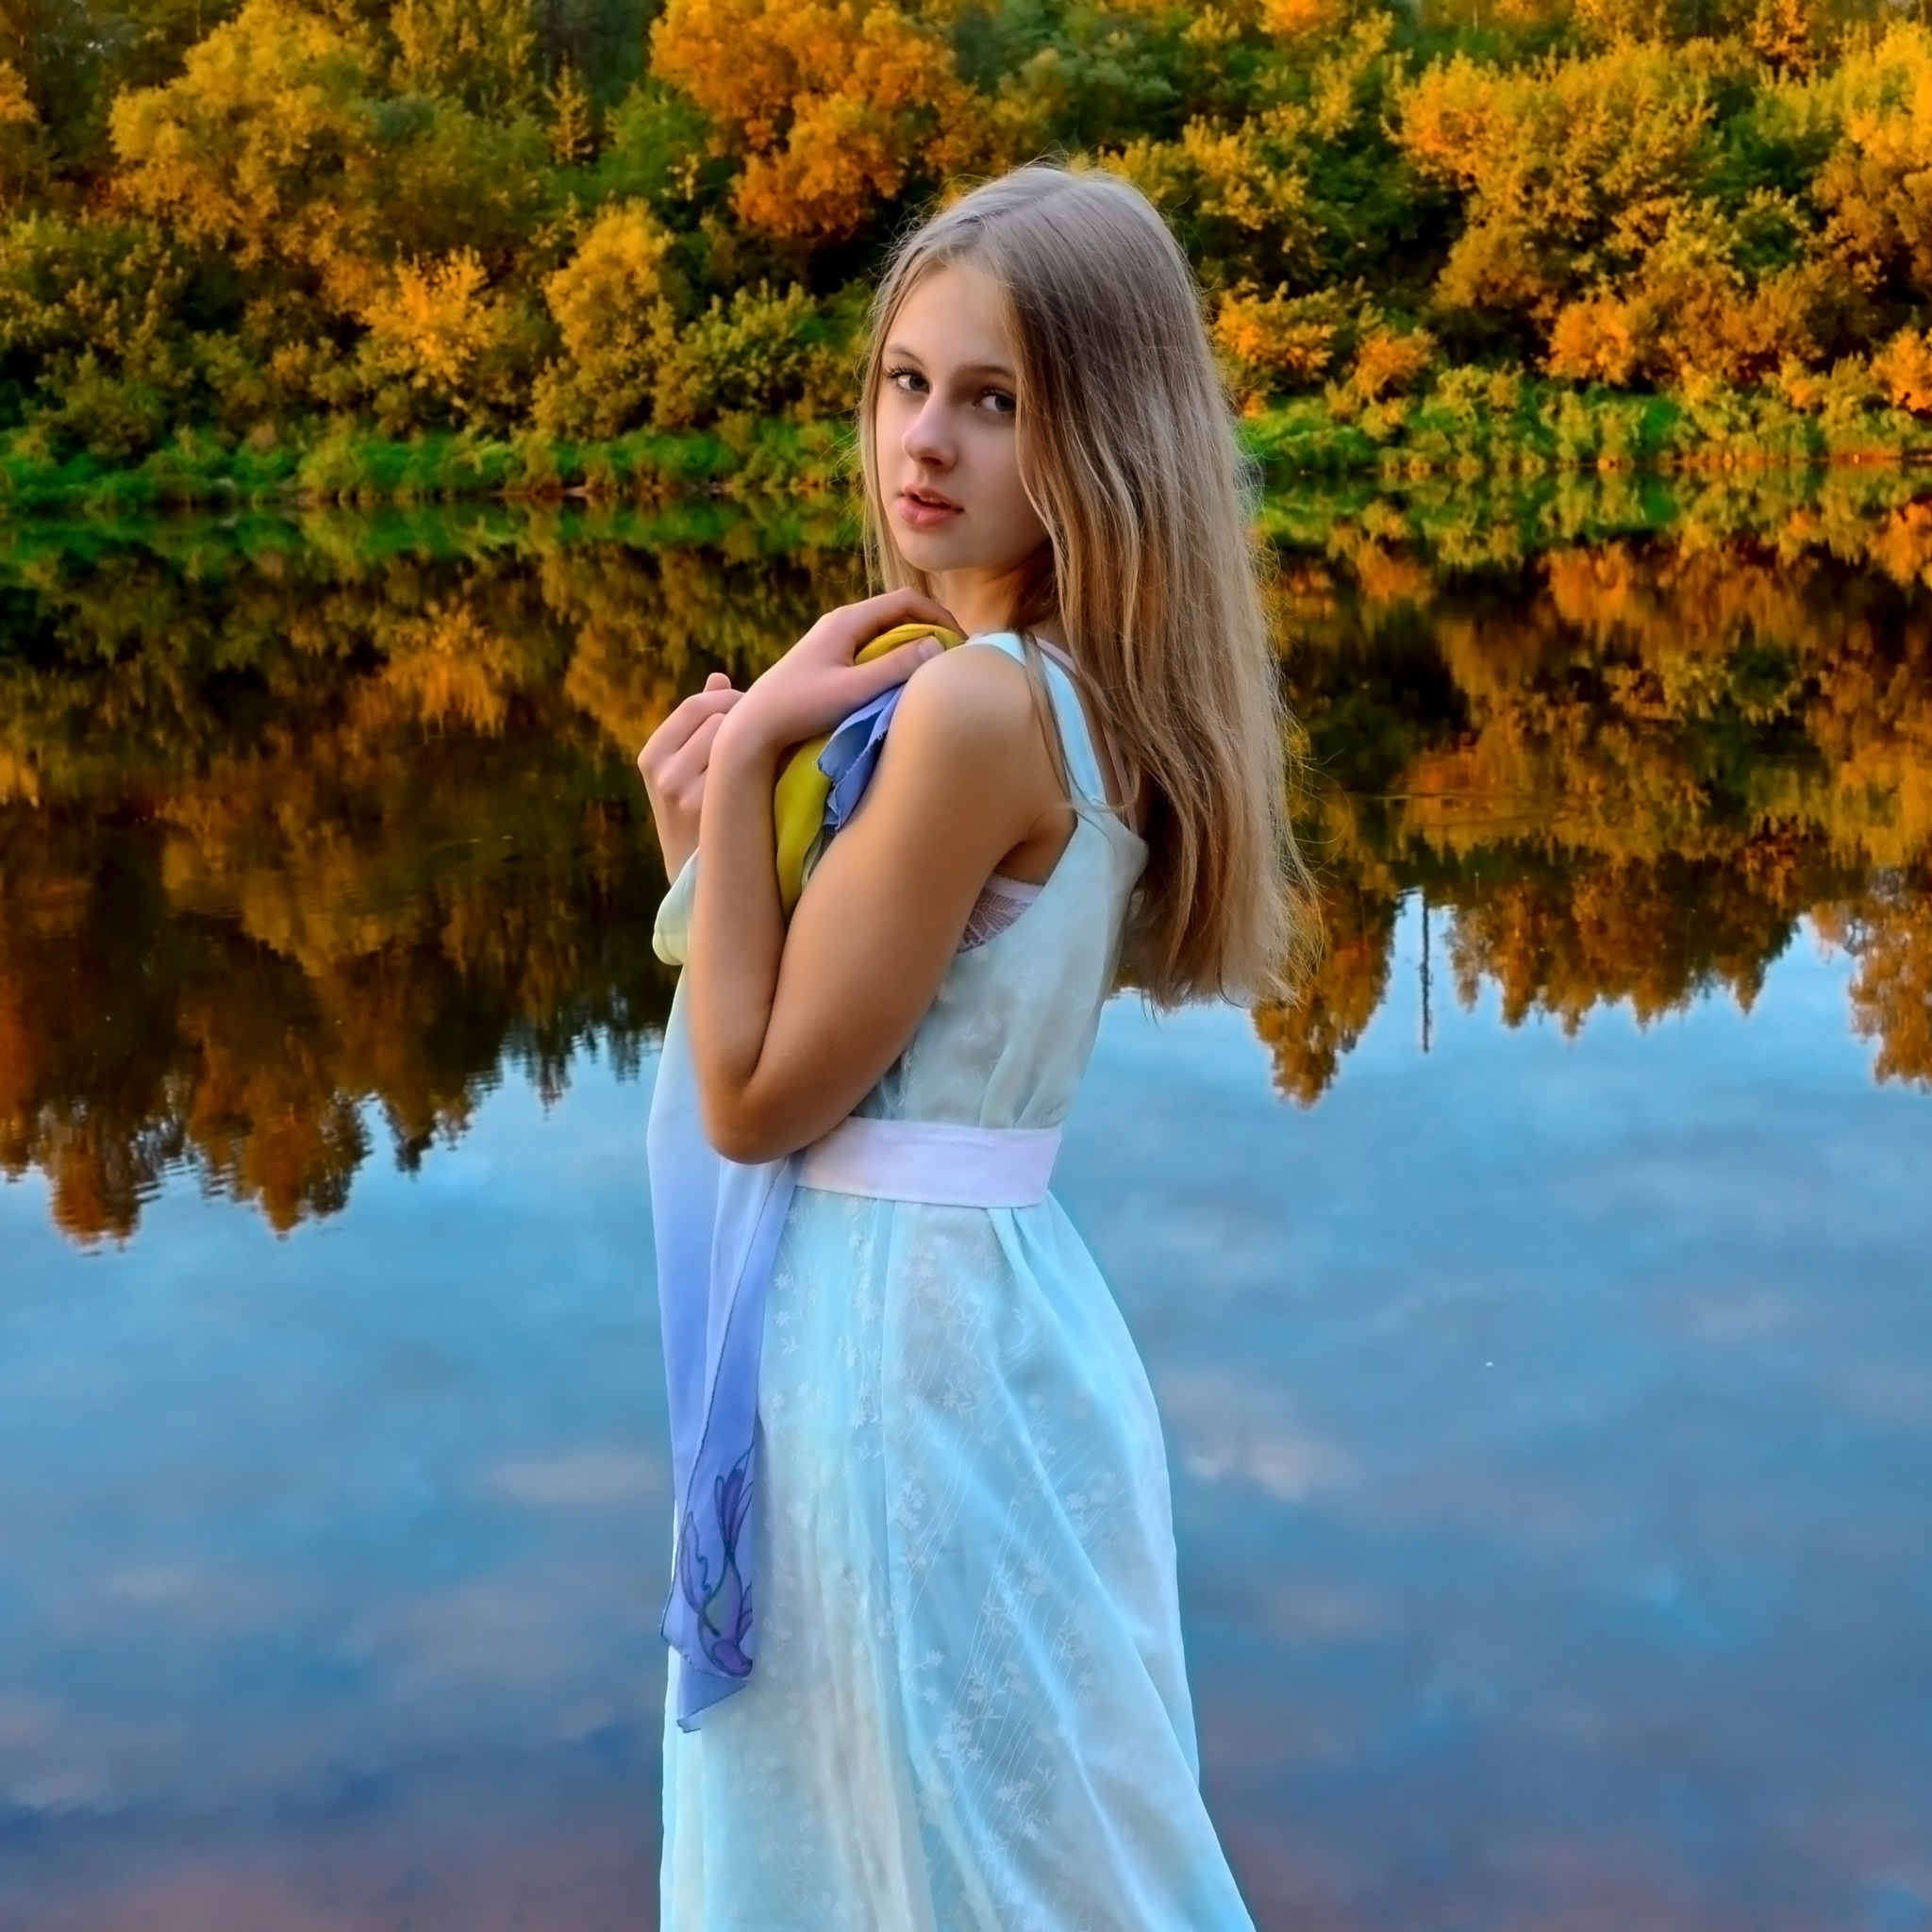 Девушка у озера 2007. Ксюша Егорова барышня крестьянка. Девушка на фоне леса. Фотосессия у озера девушки. Девочки на озере.